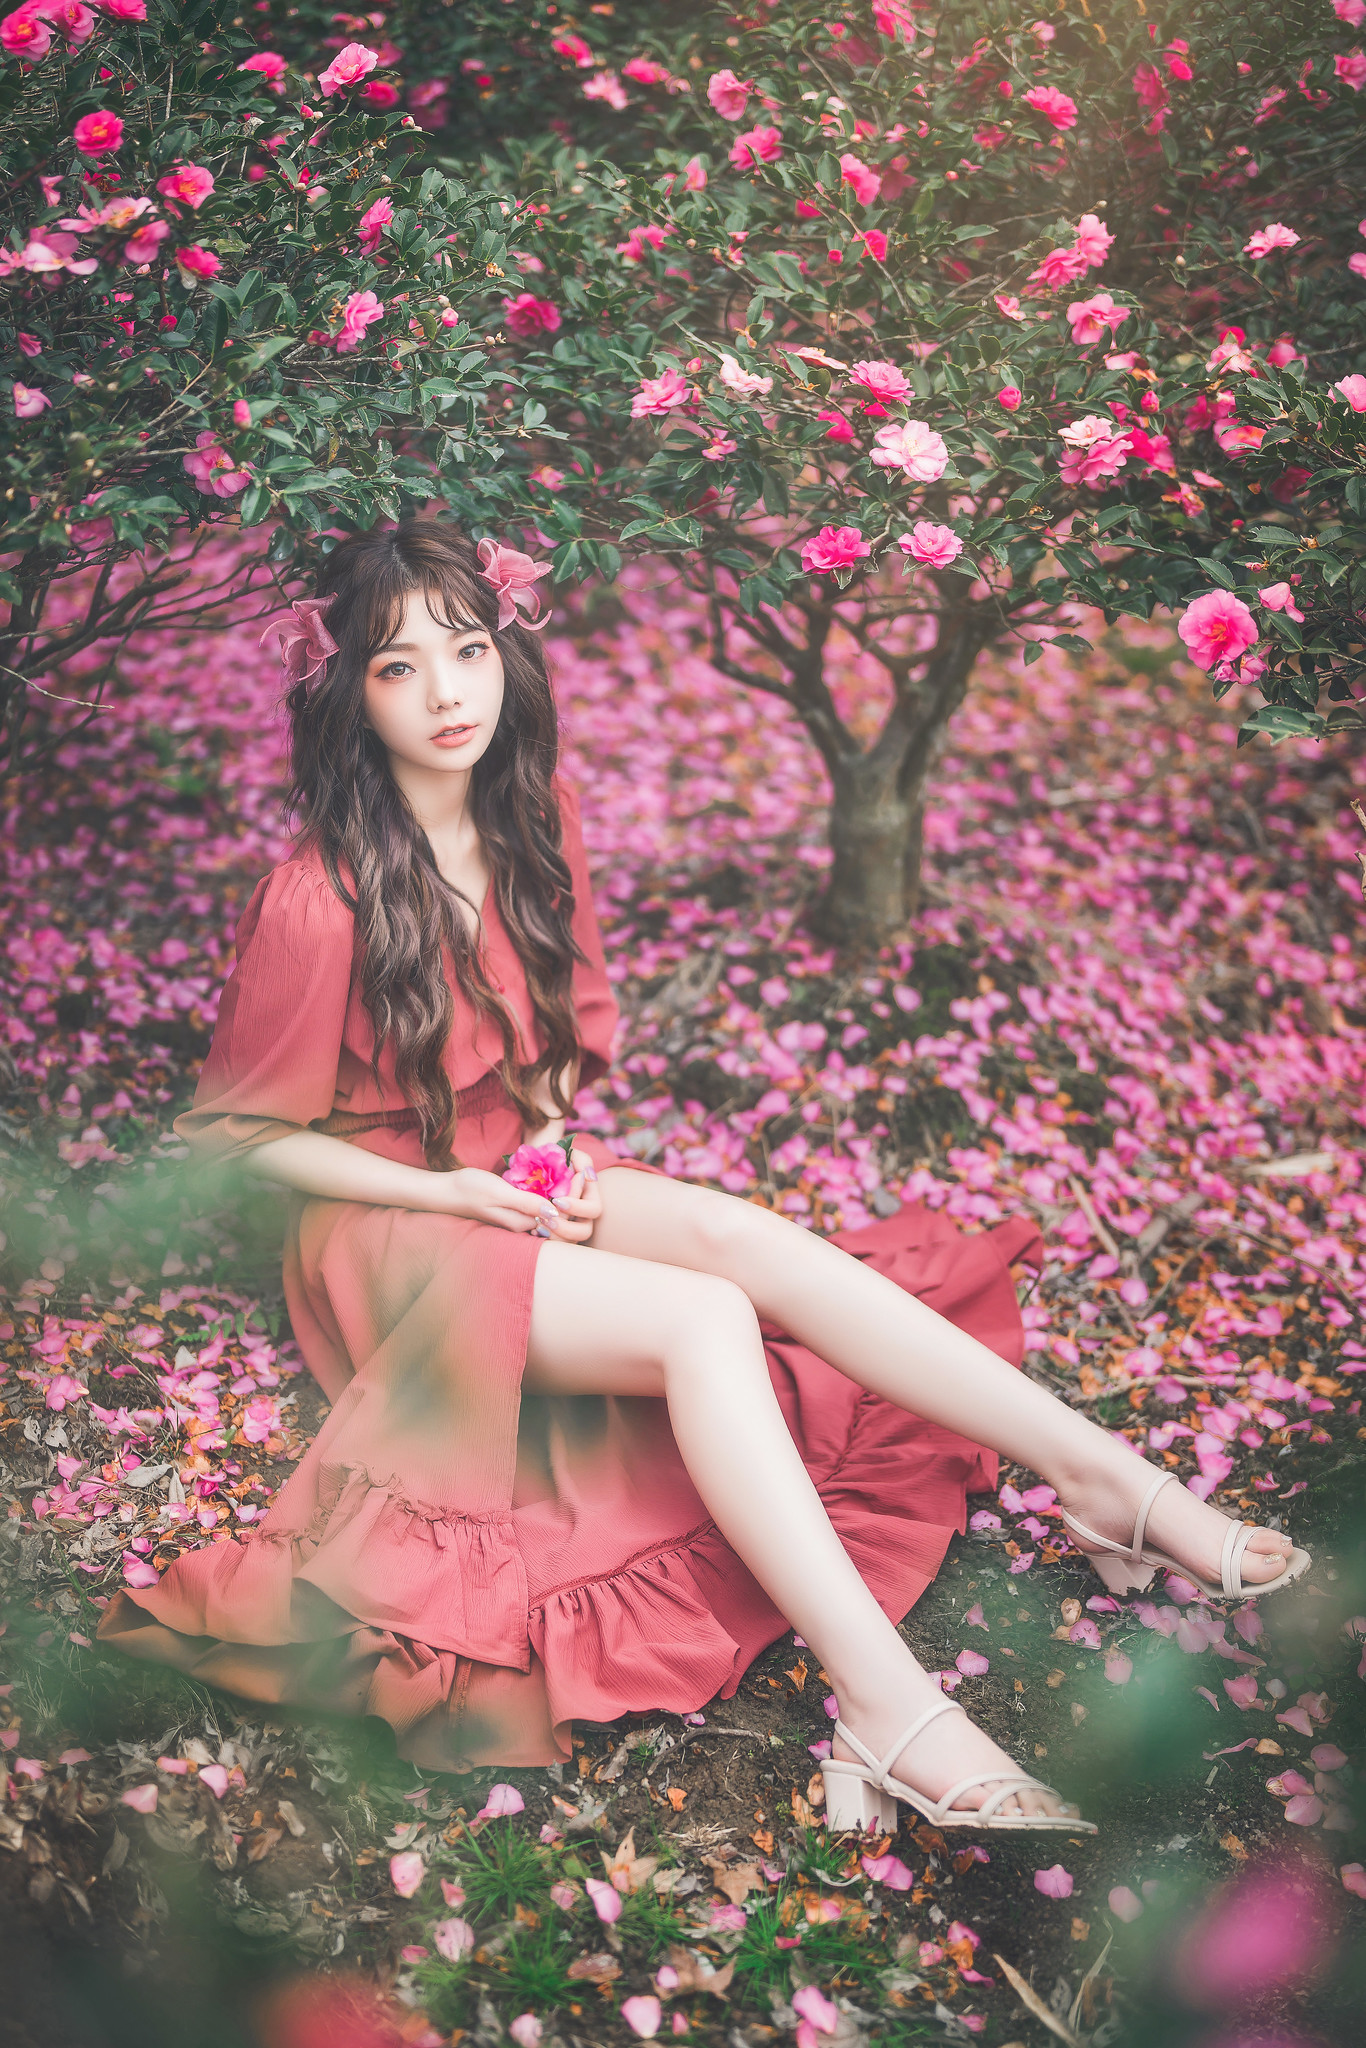 Asian Women Women Outdoors Model Flowers Plants Looking At Viewer Legs Long Hair Brunette Sitting 1366x2048